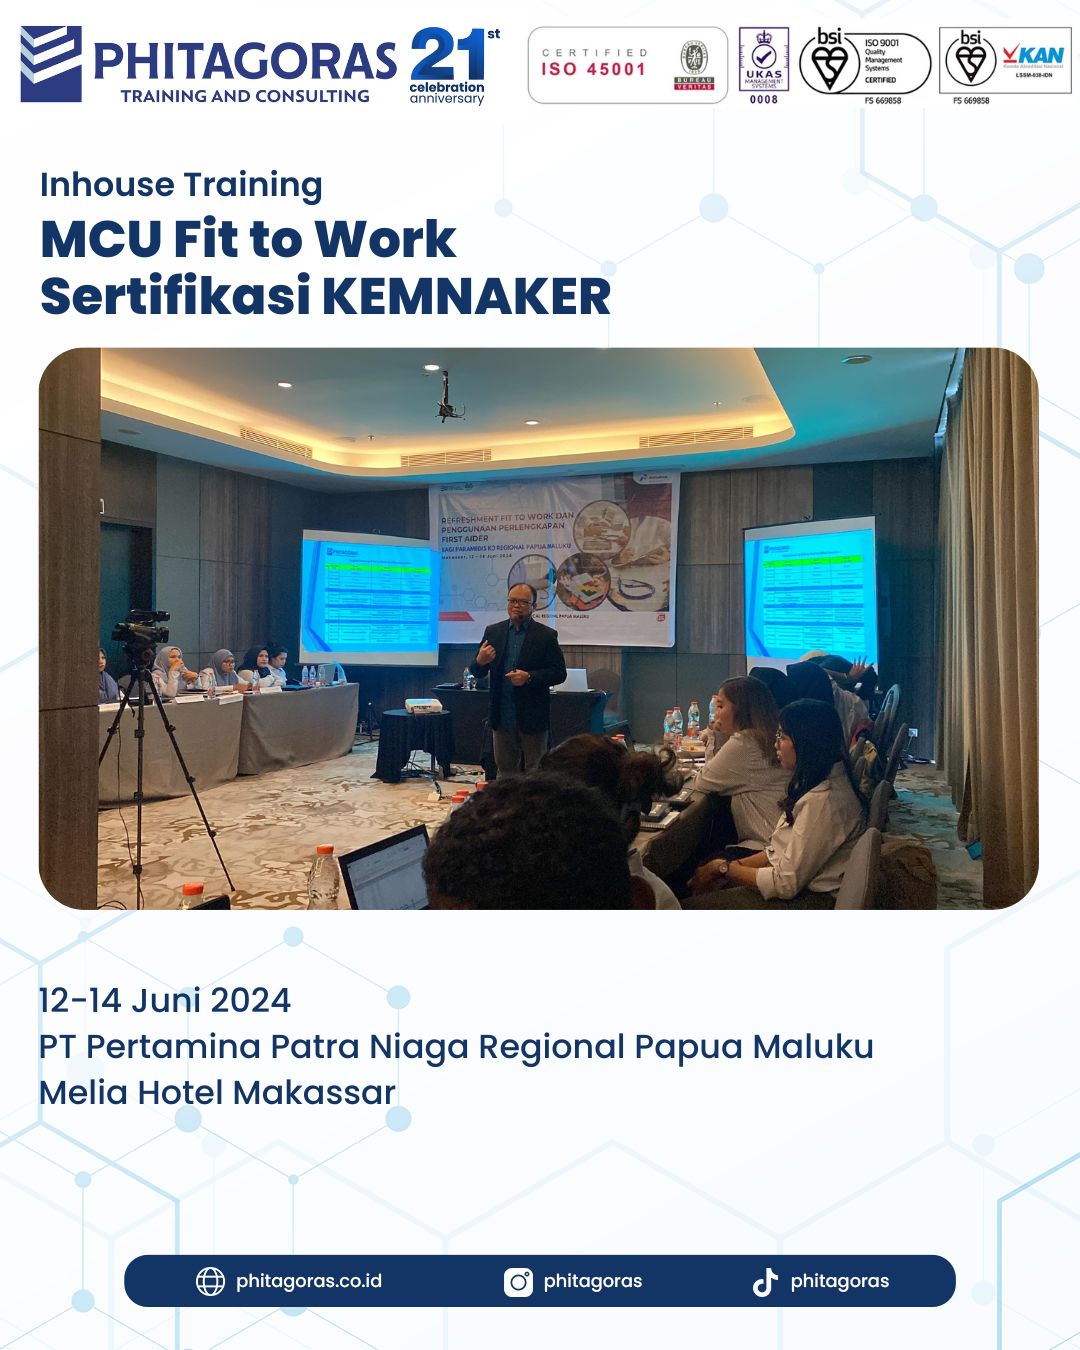 MCU fit to work Kemnaker - PT Pertamina Patra Niaga Regional Papua Maluku